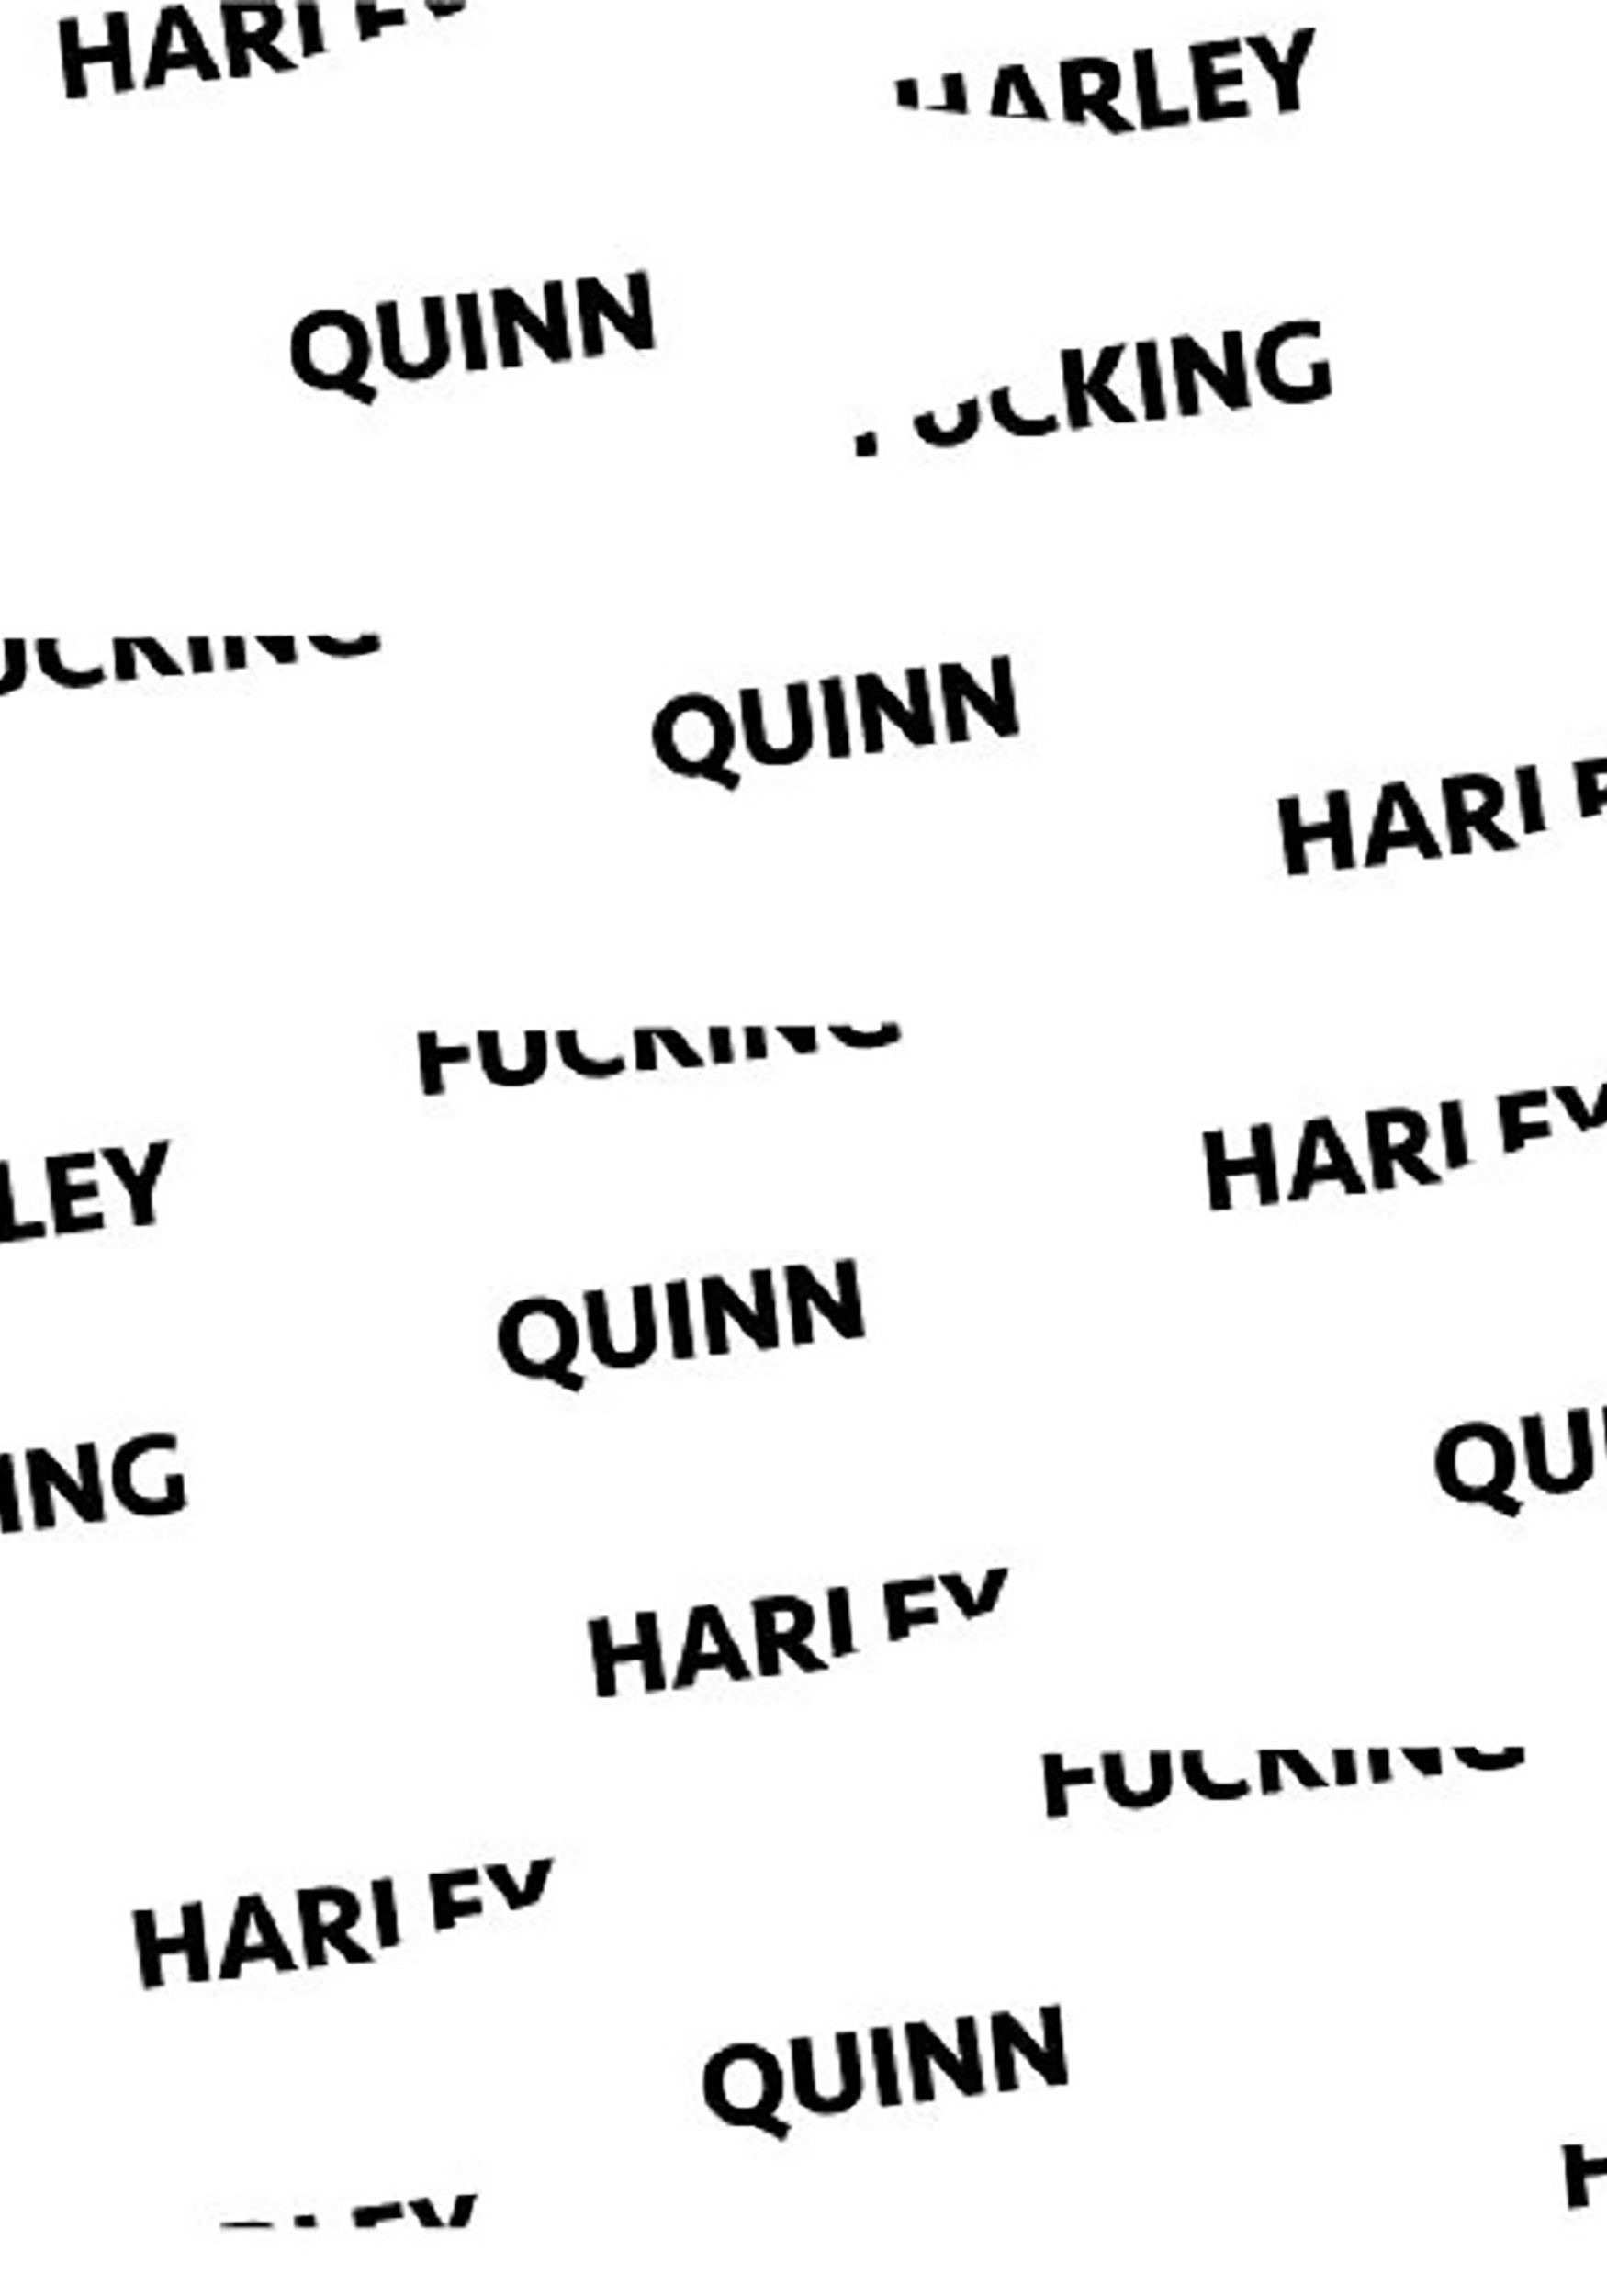 harley quinn t shirt font